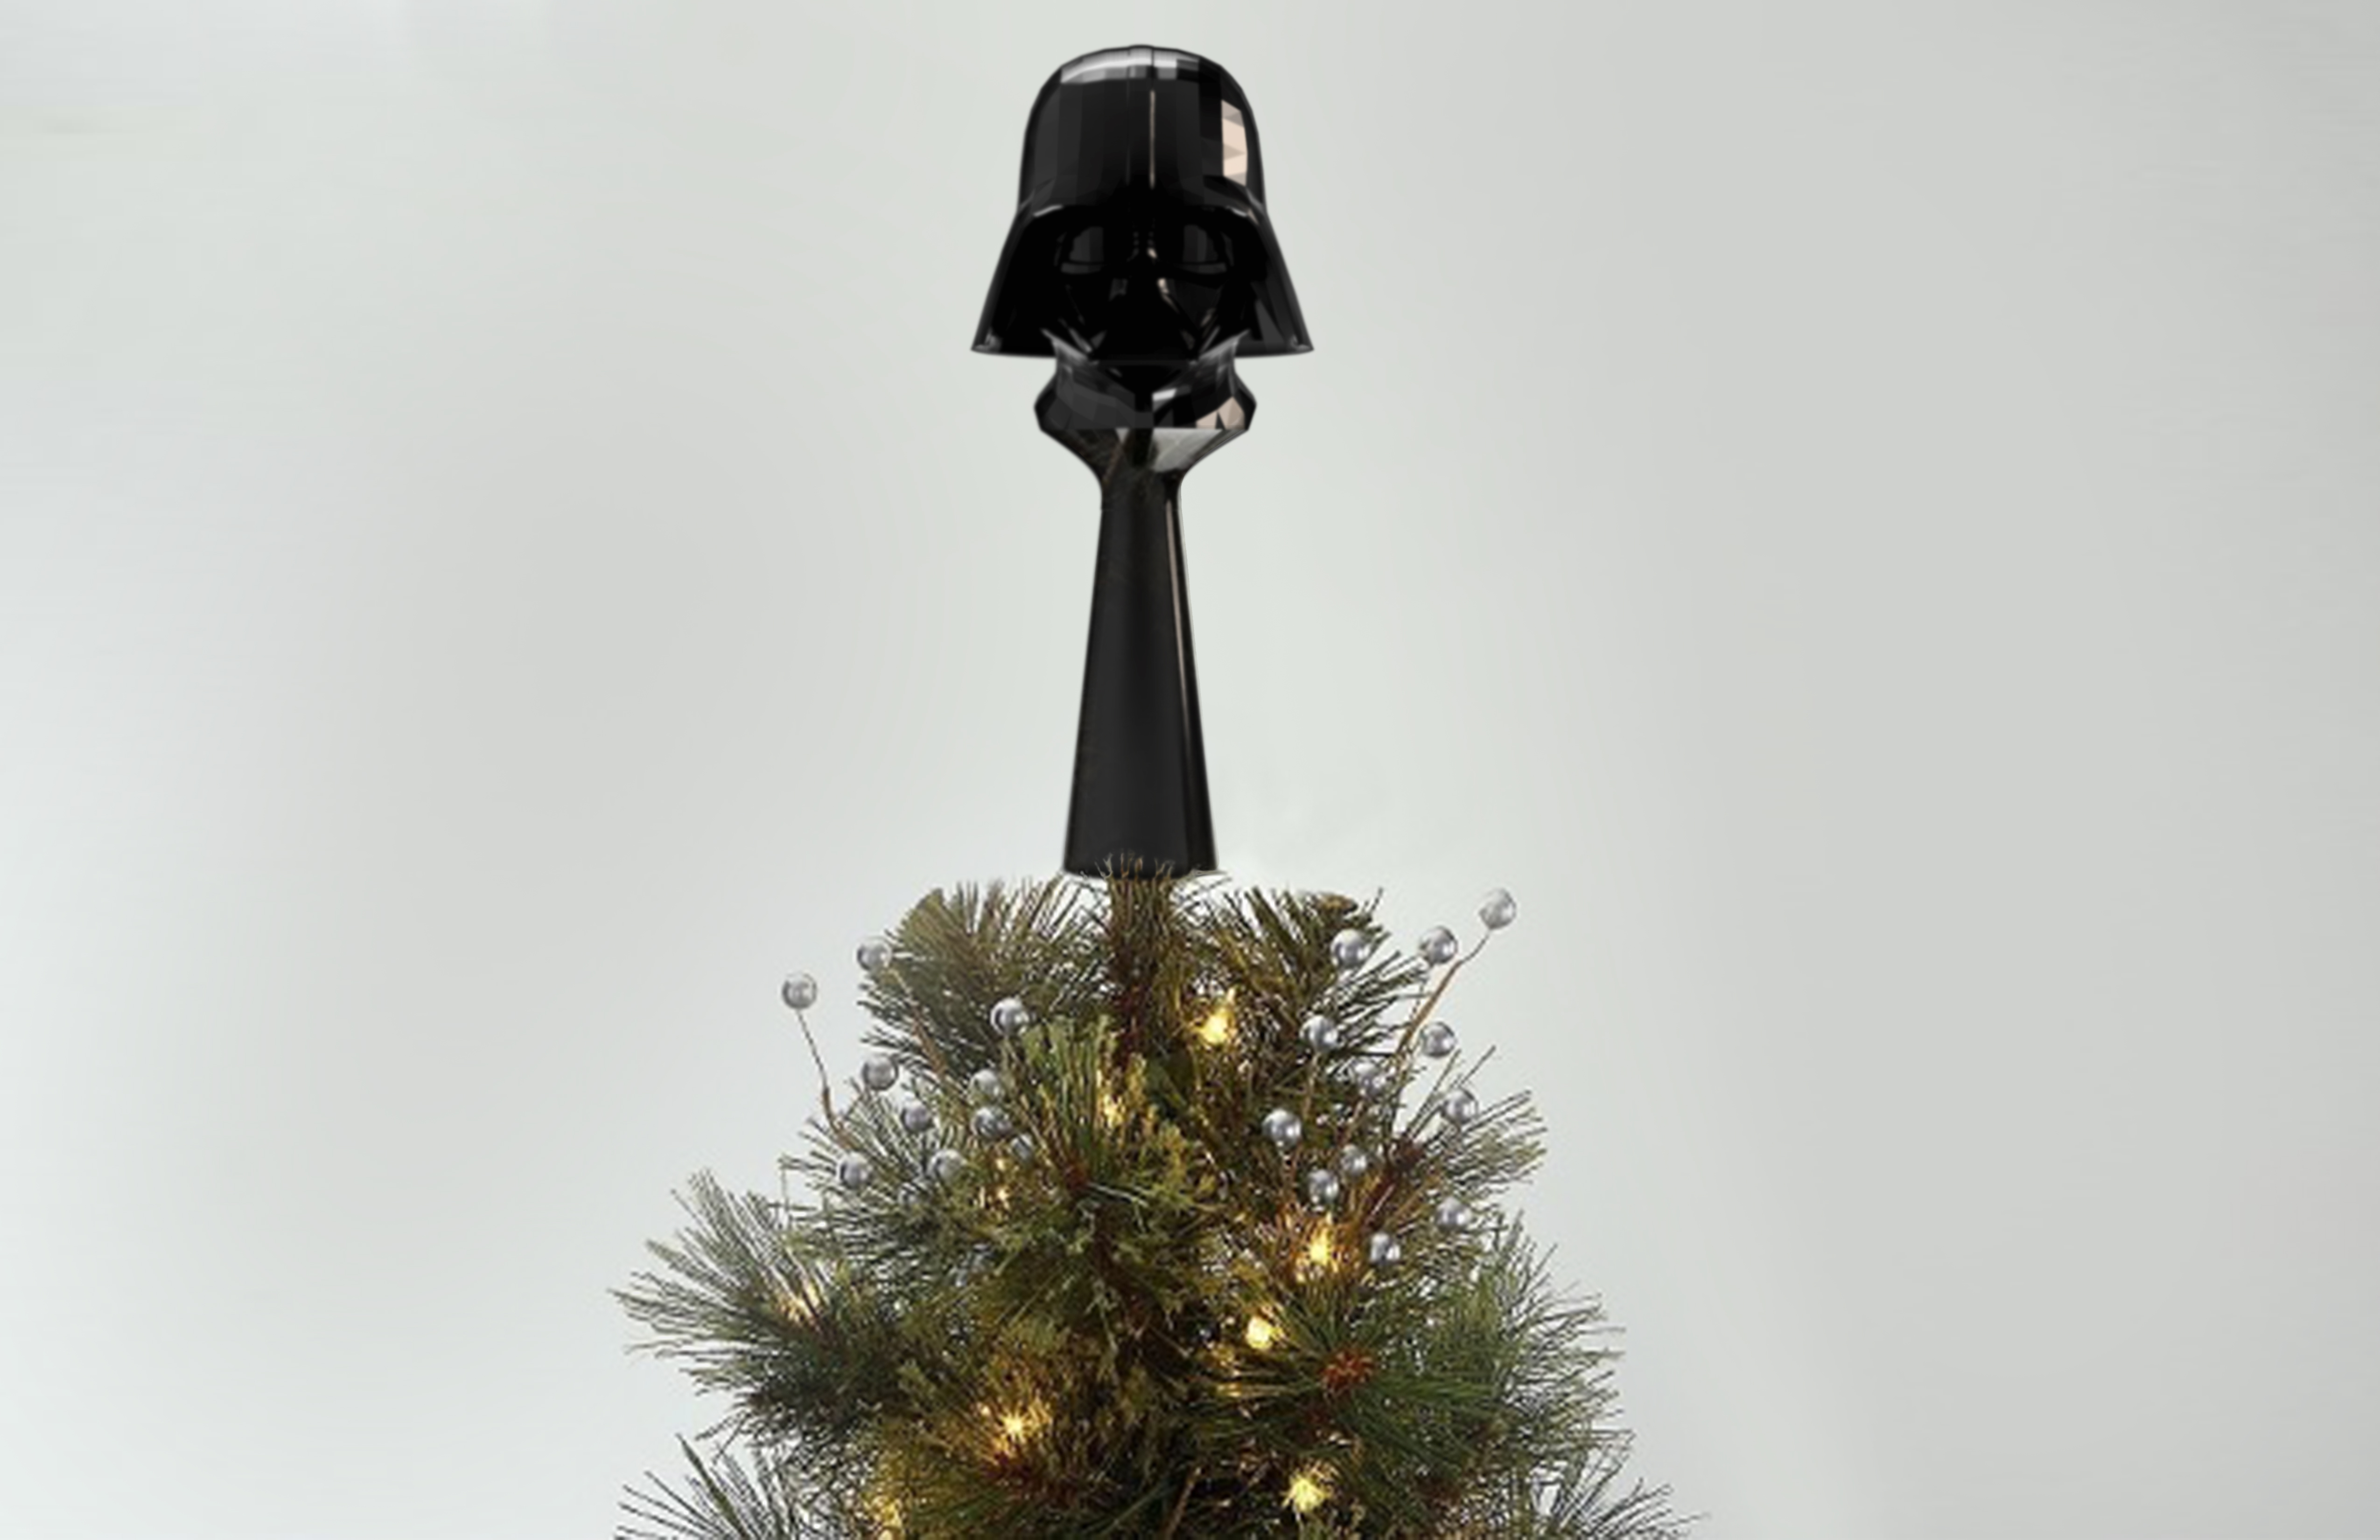 Darth Vader Christmas Tree Topper